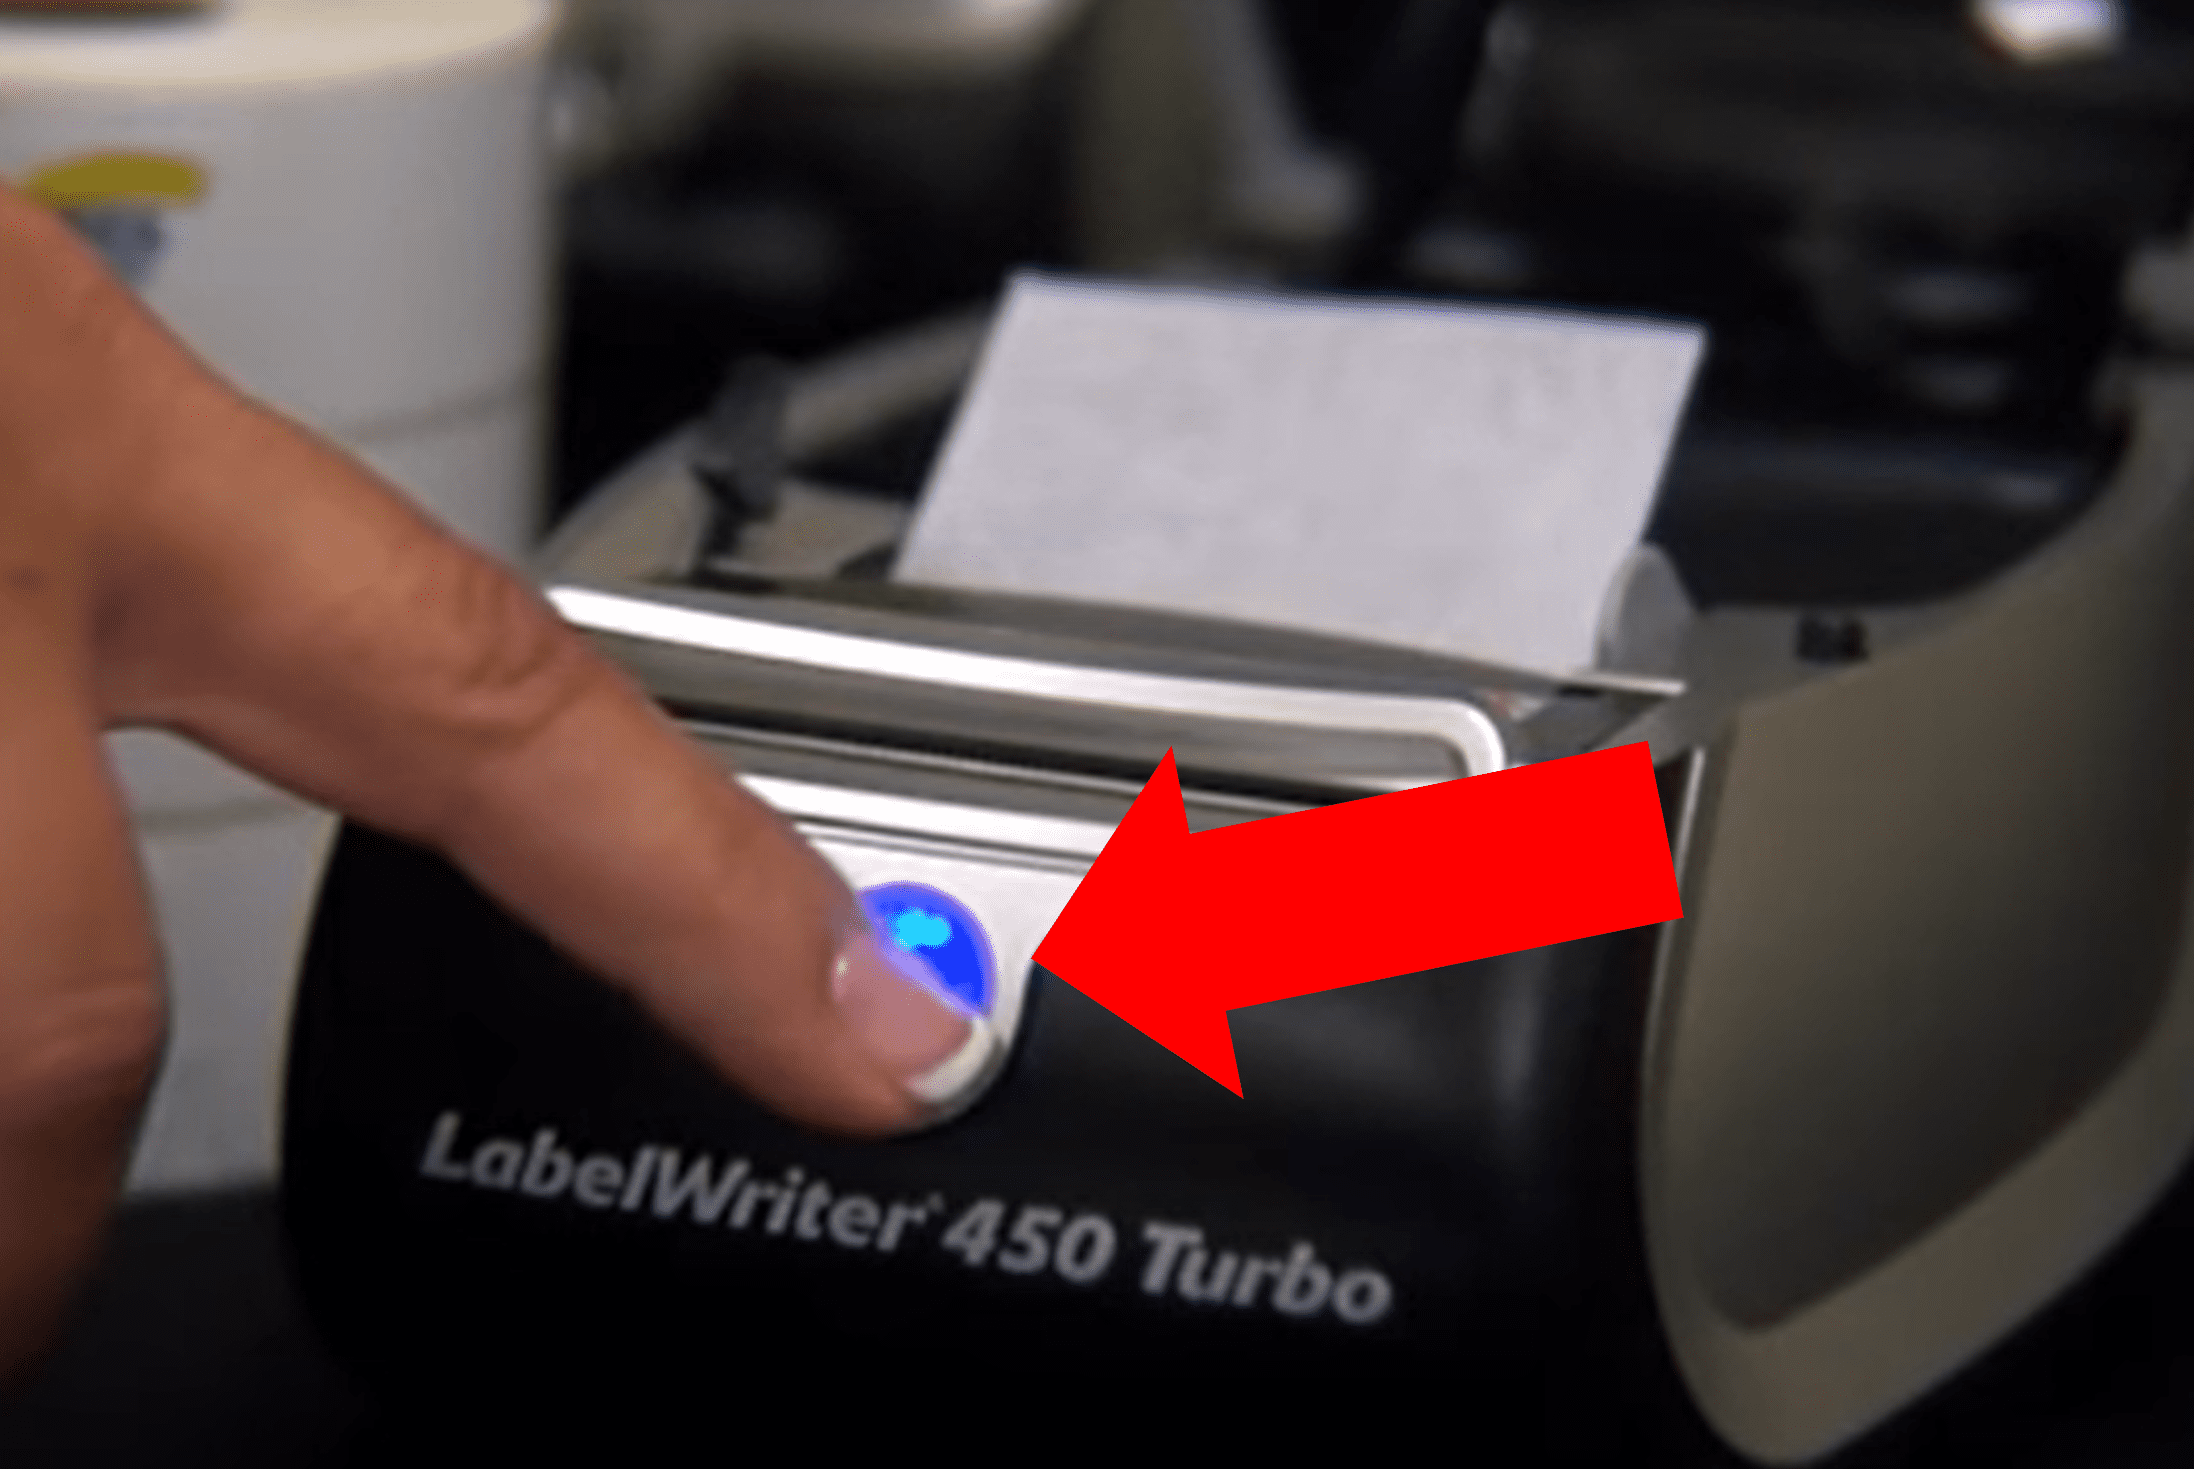 Dymo printing blank labels - clean the sensor